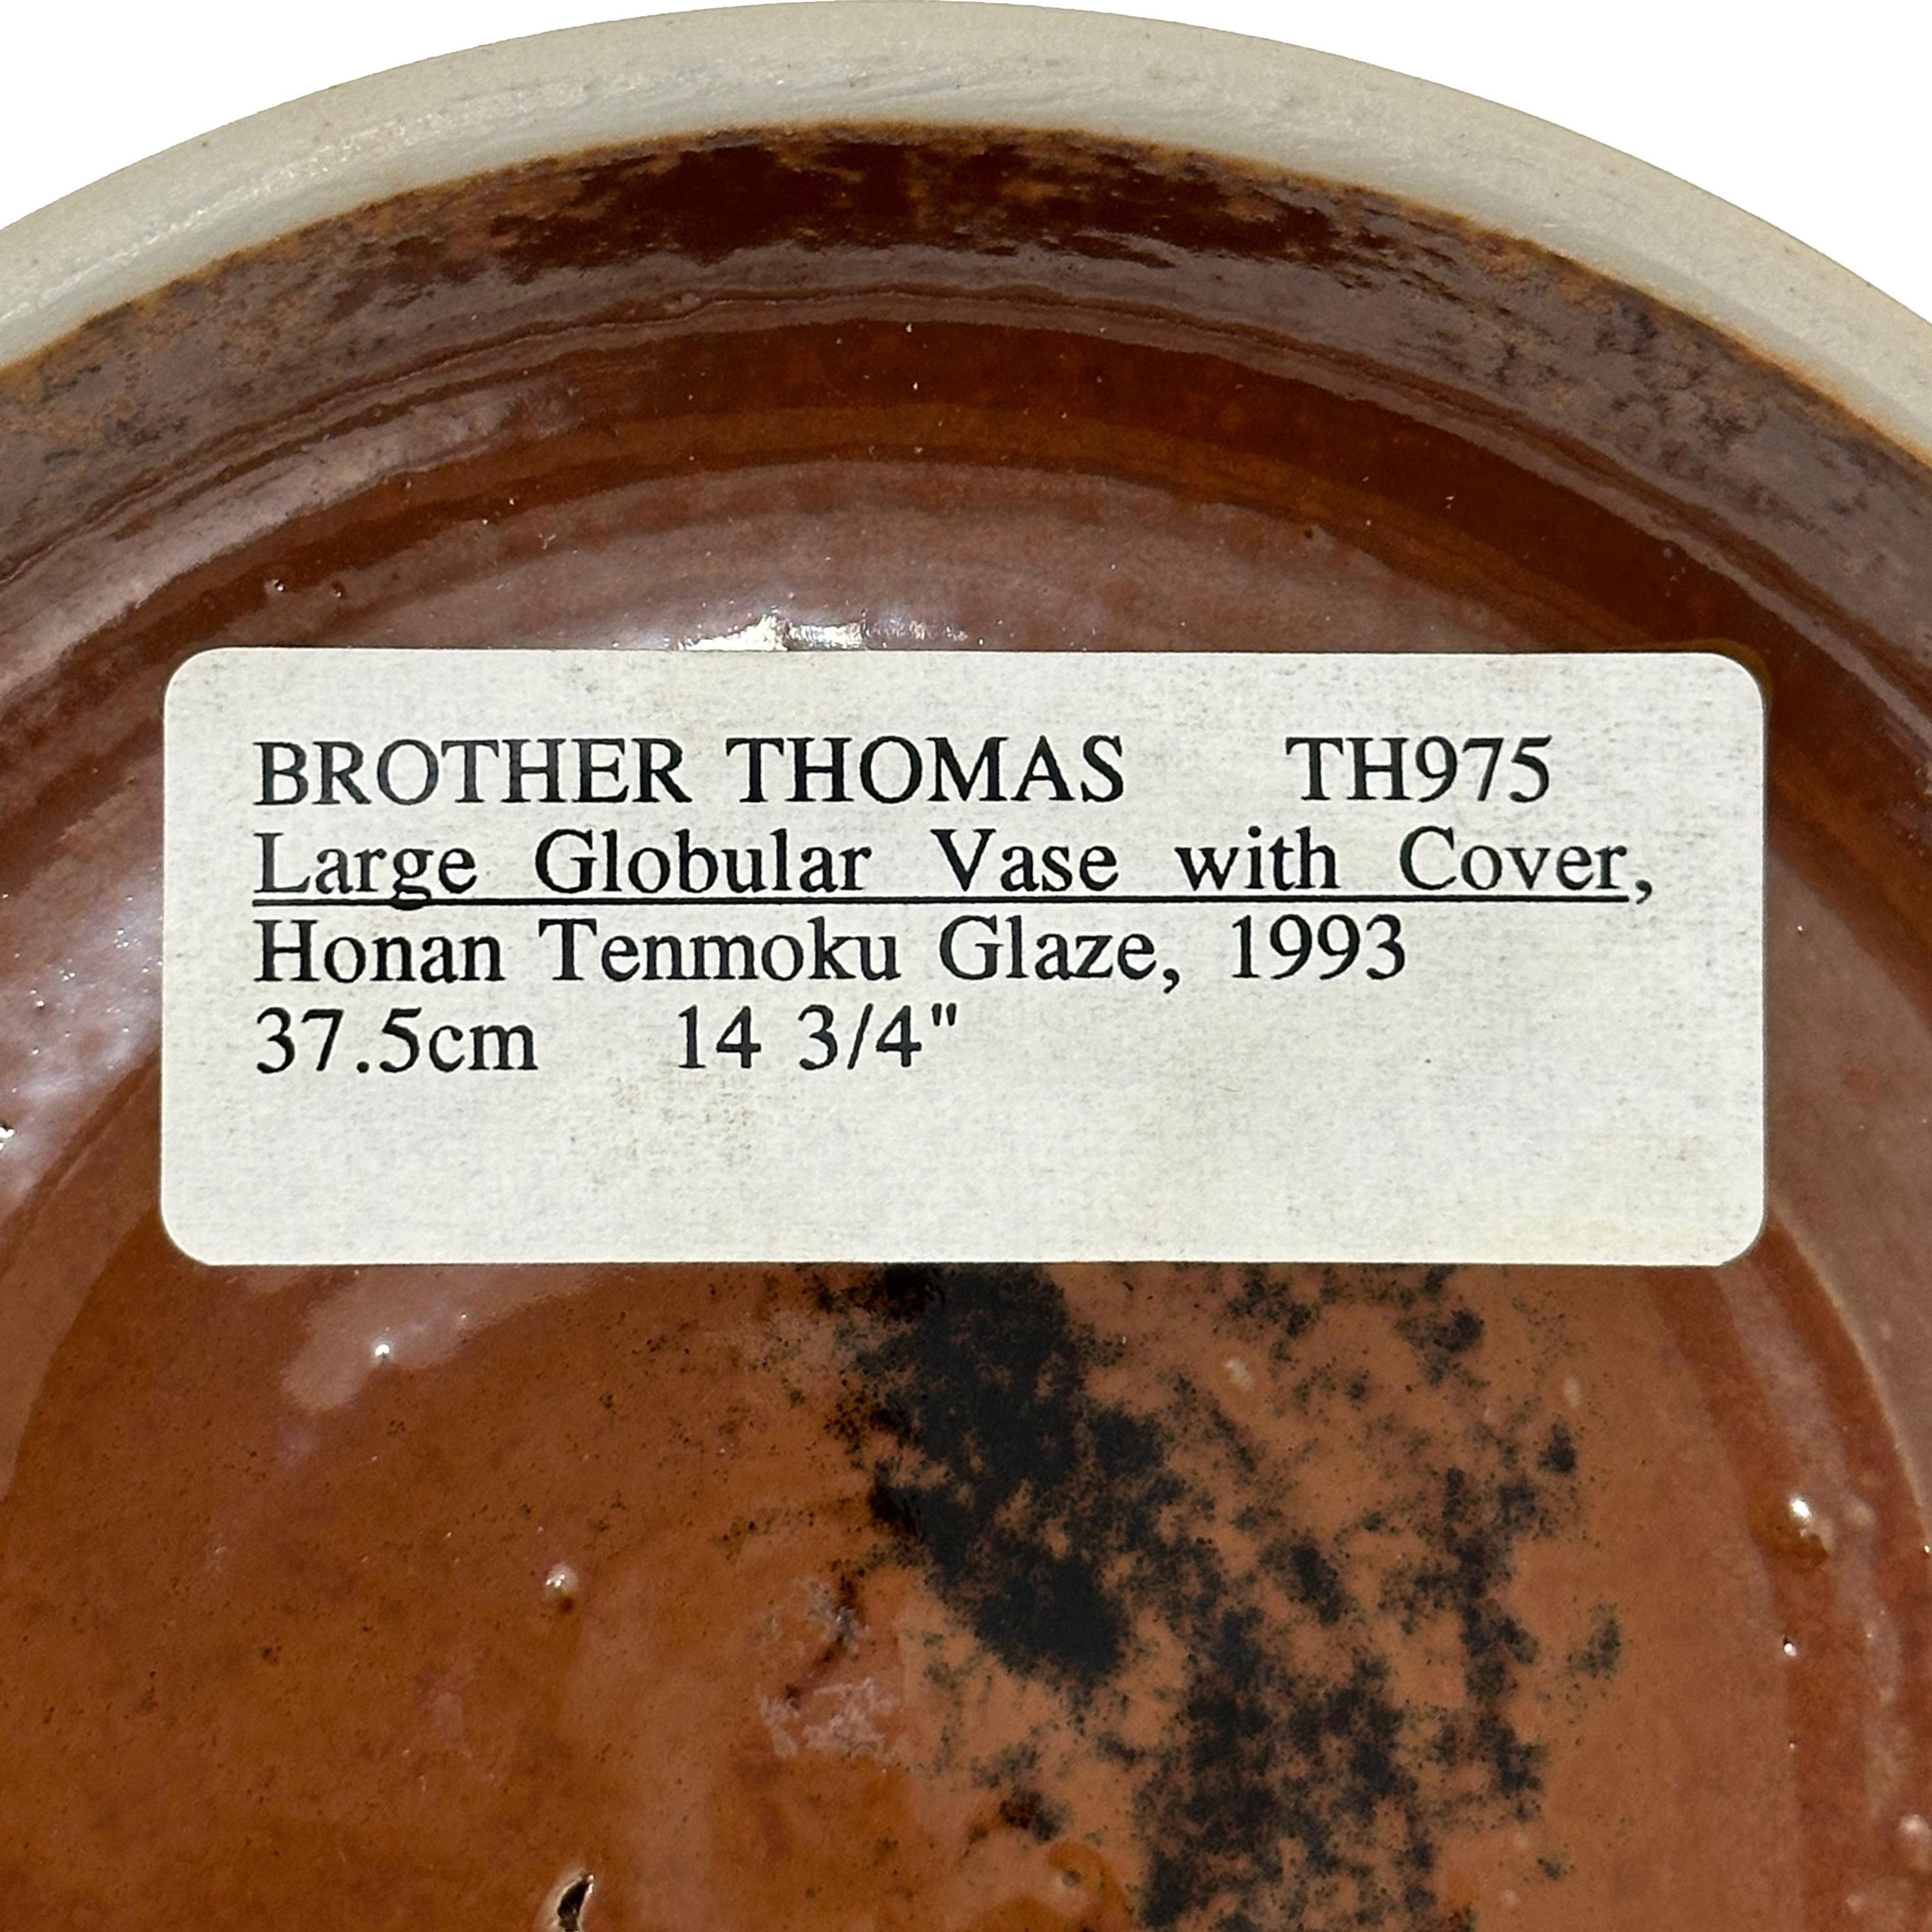 Brother Thomas Bezanson Honan Tenmoku Glaze Large Globular Vase with Cover, 1993 For Sale 2